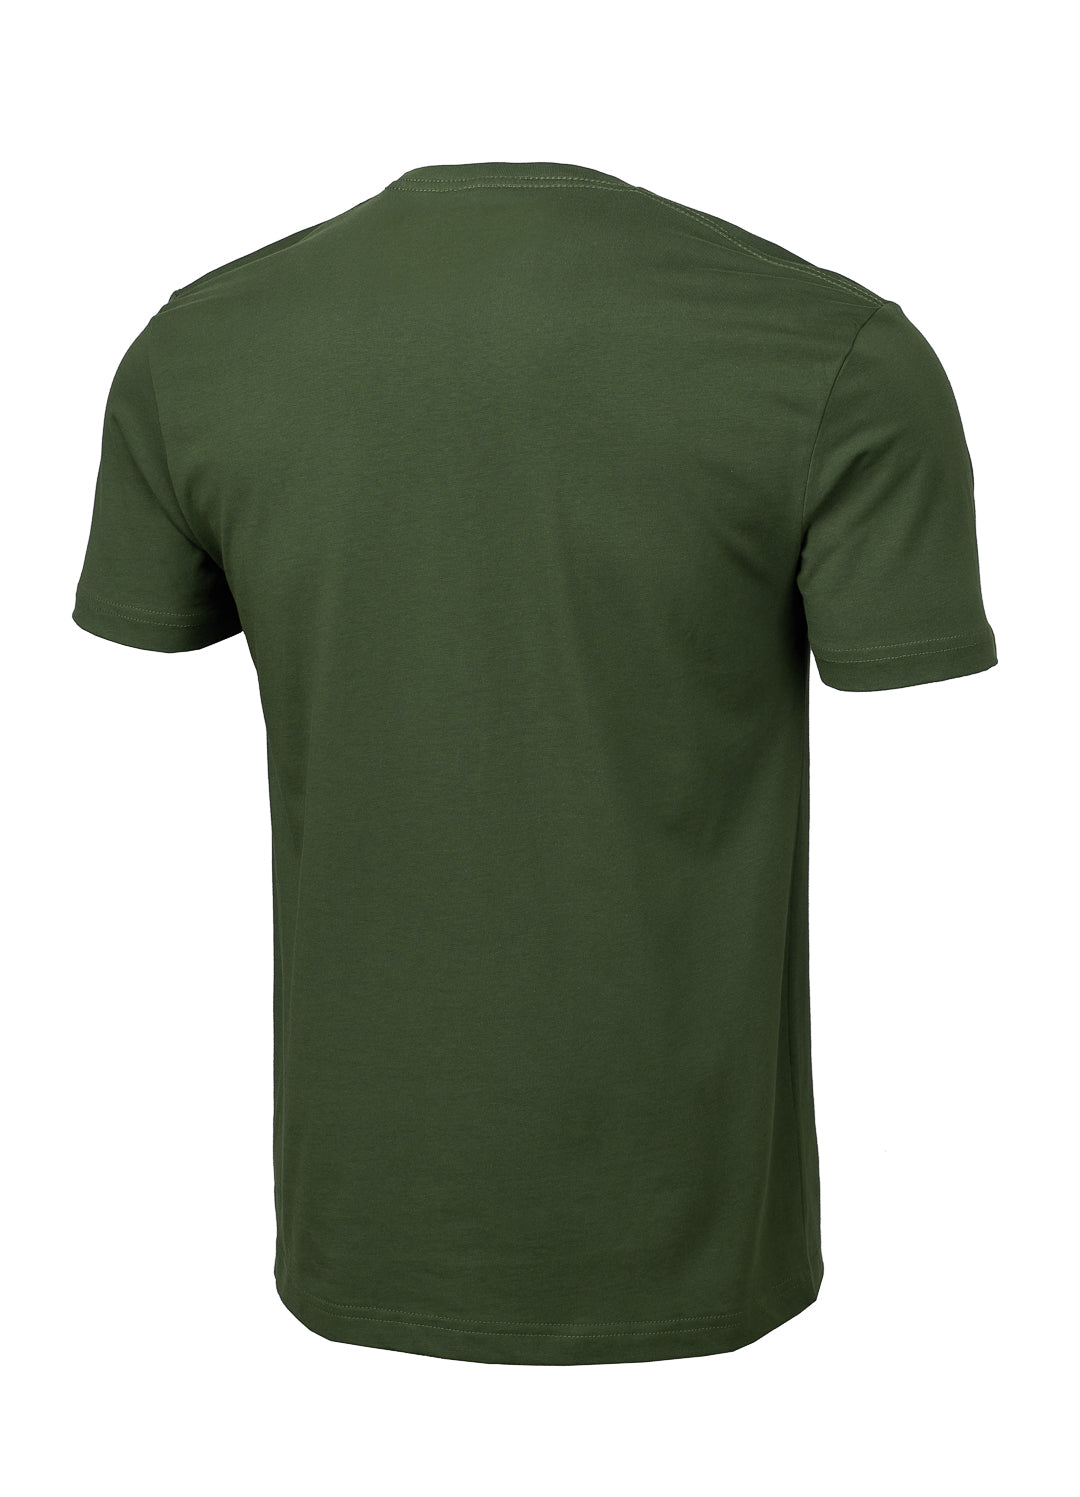 SMALL LOGO 21 Olive T-Shirt